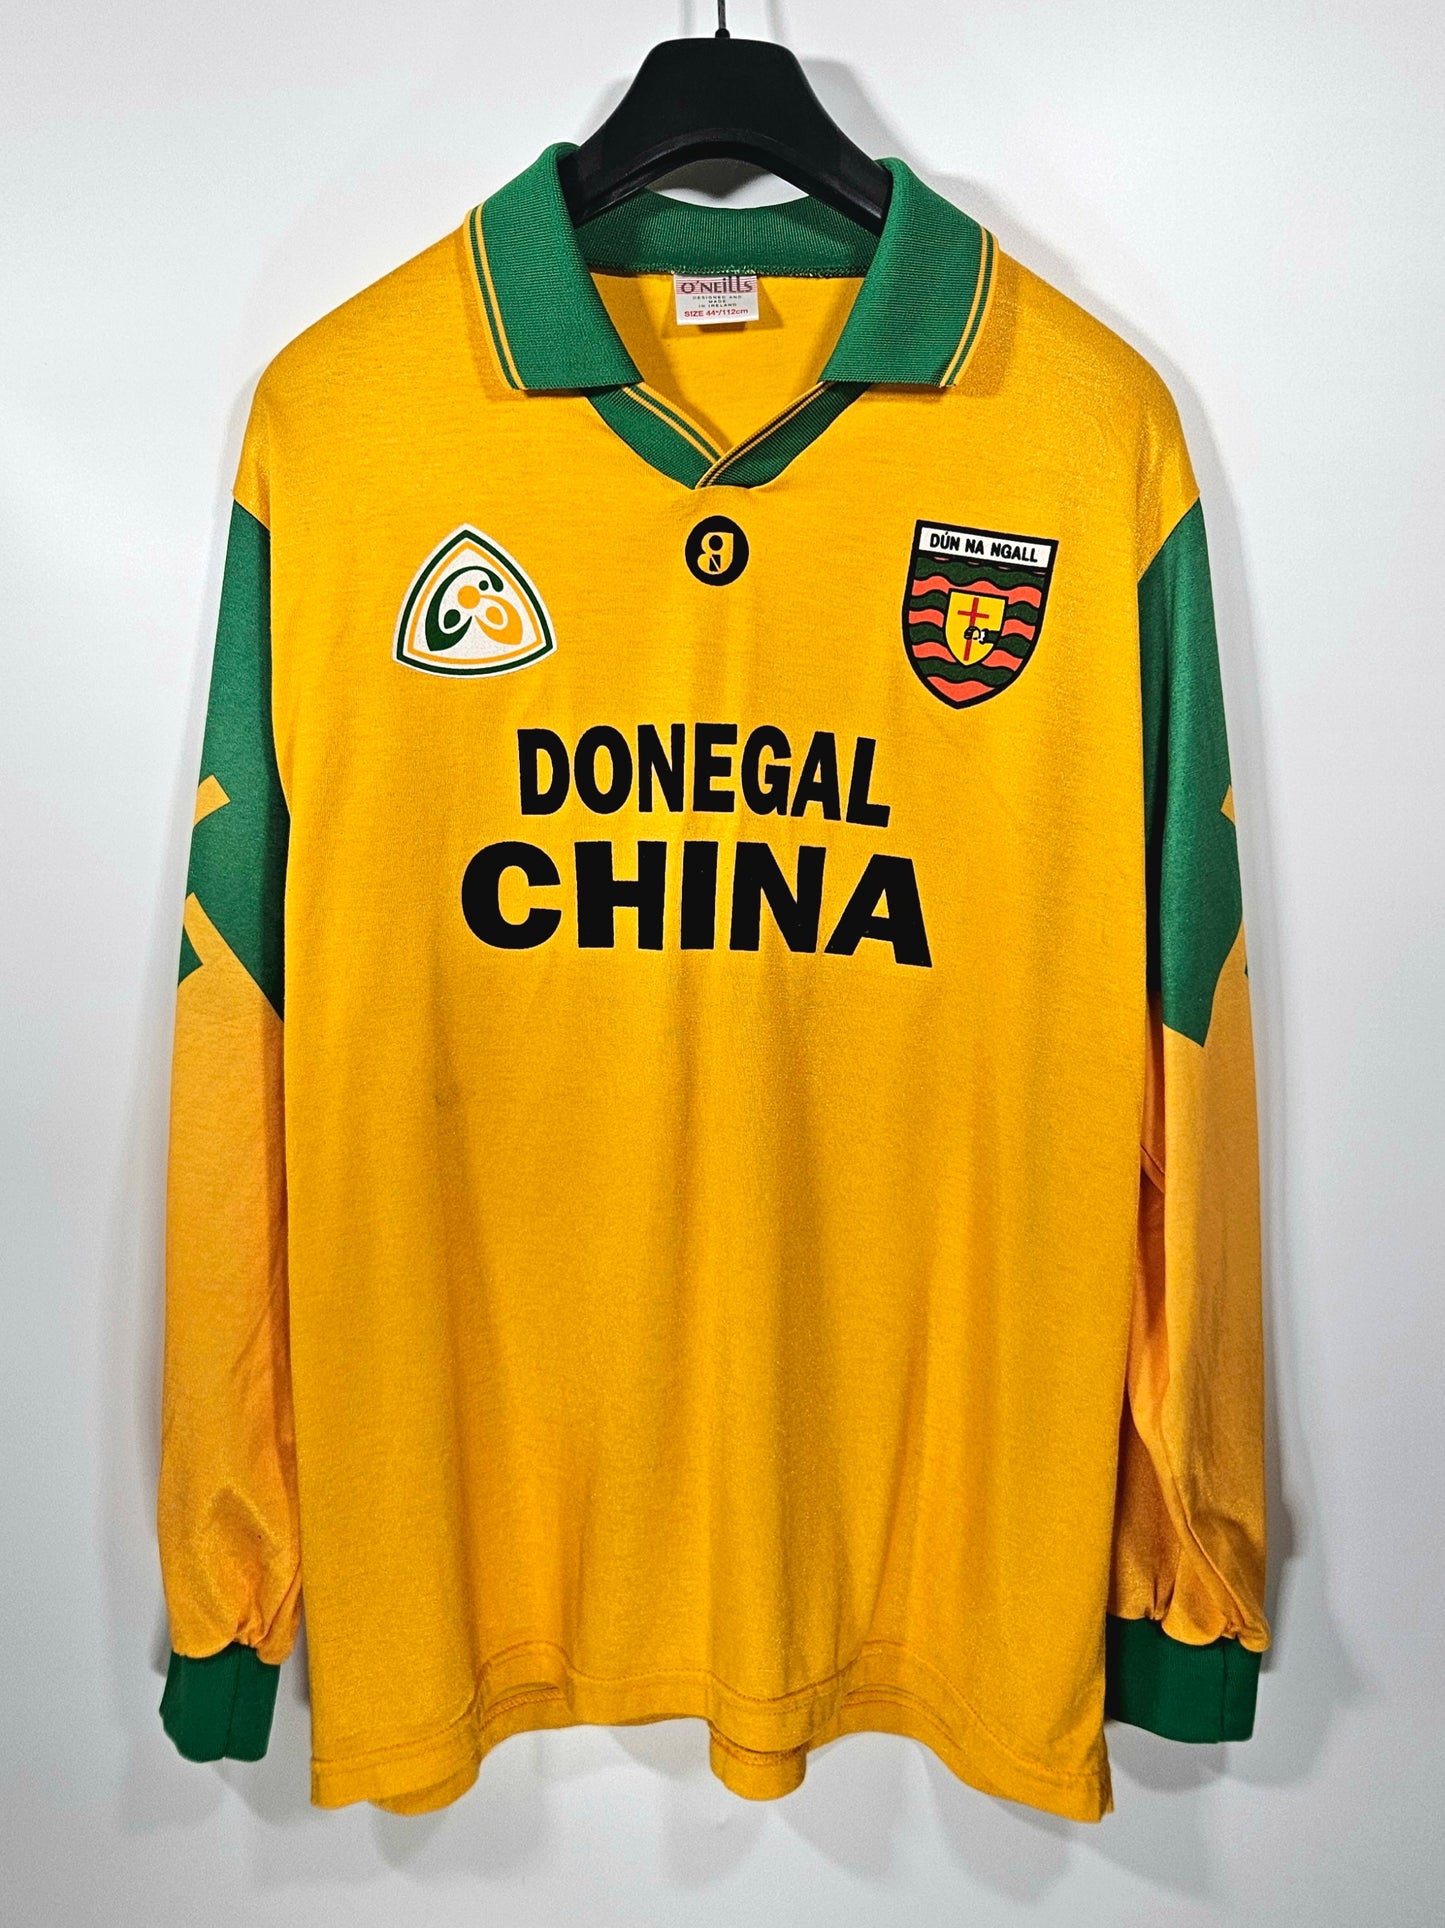 Donegal 1996 (L/XL) - Match Worn #11